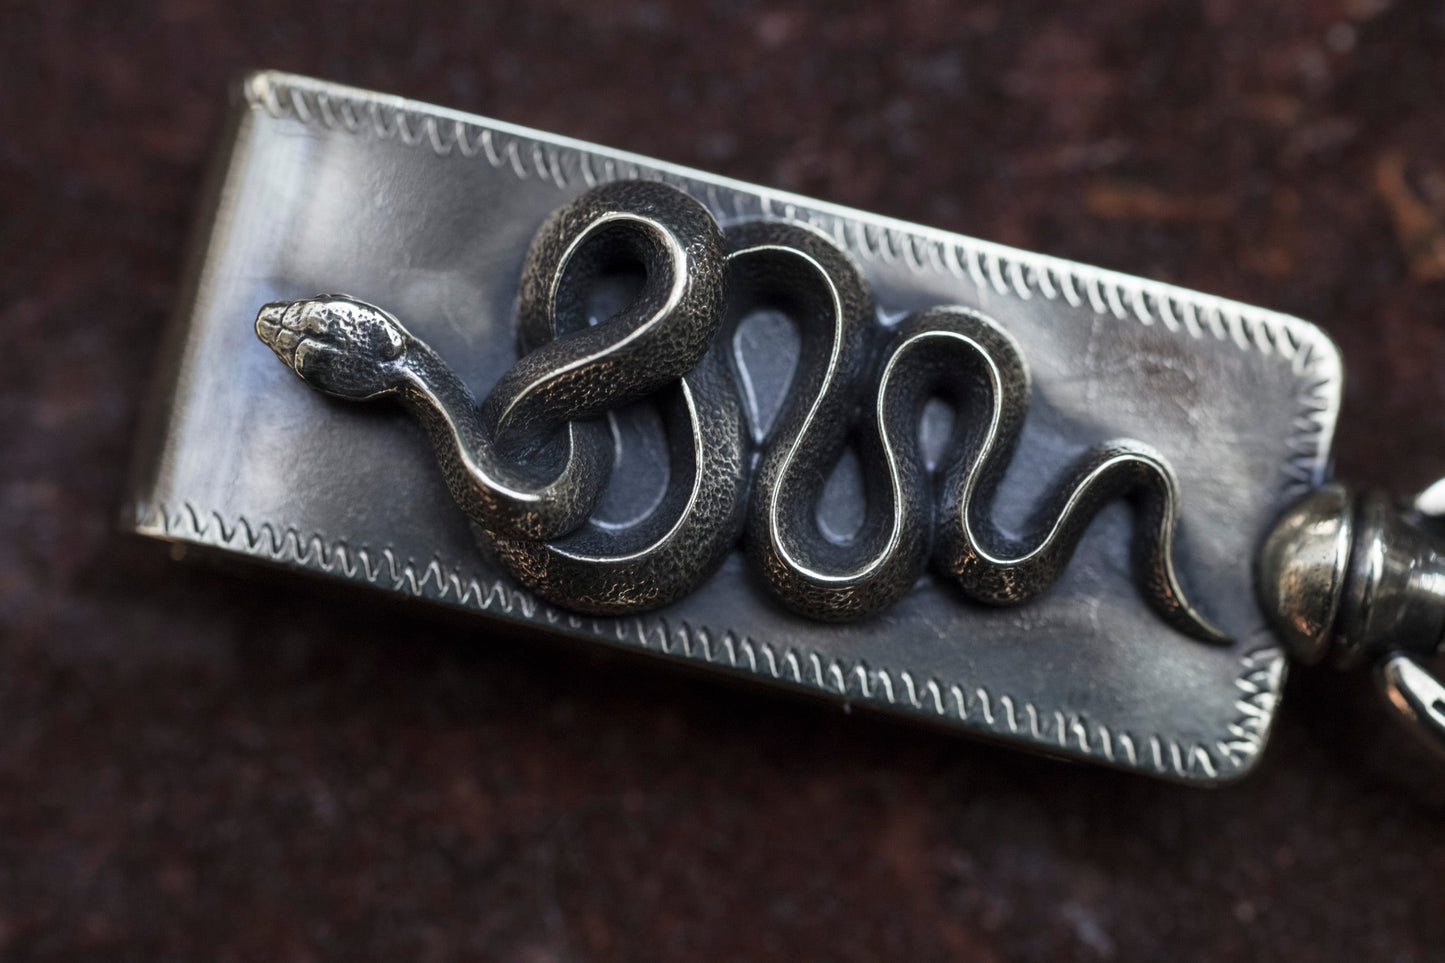 Peanuts&Co snake clip type keychain brass